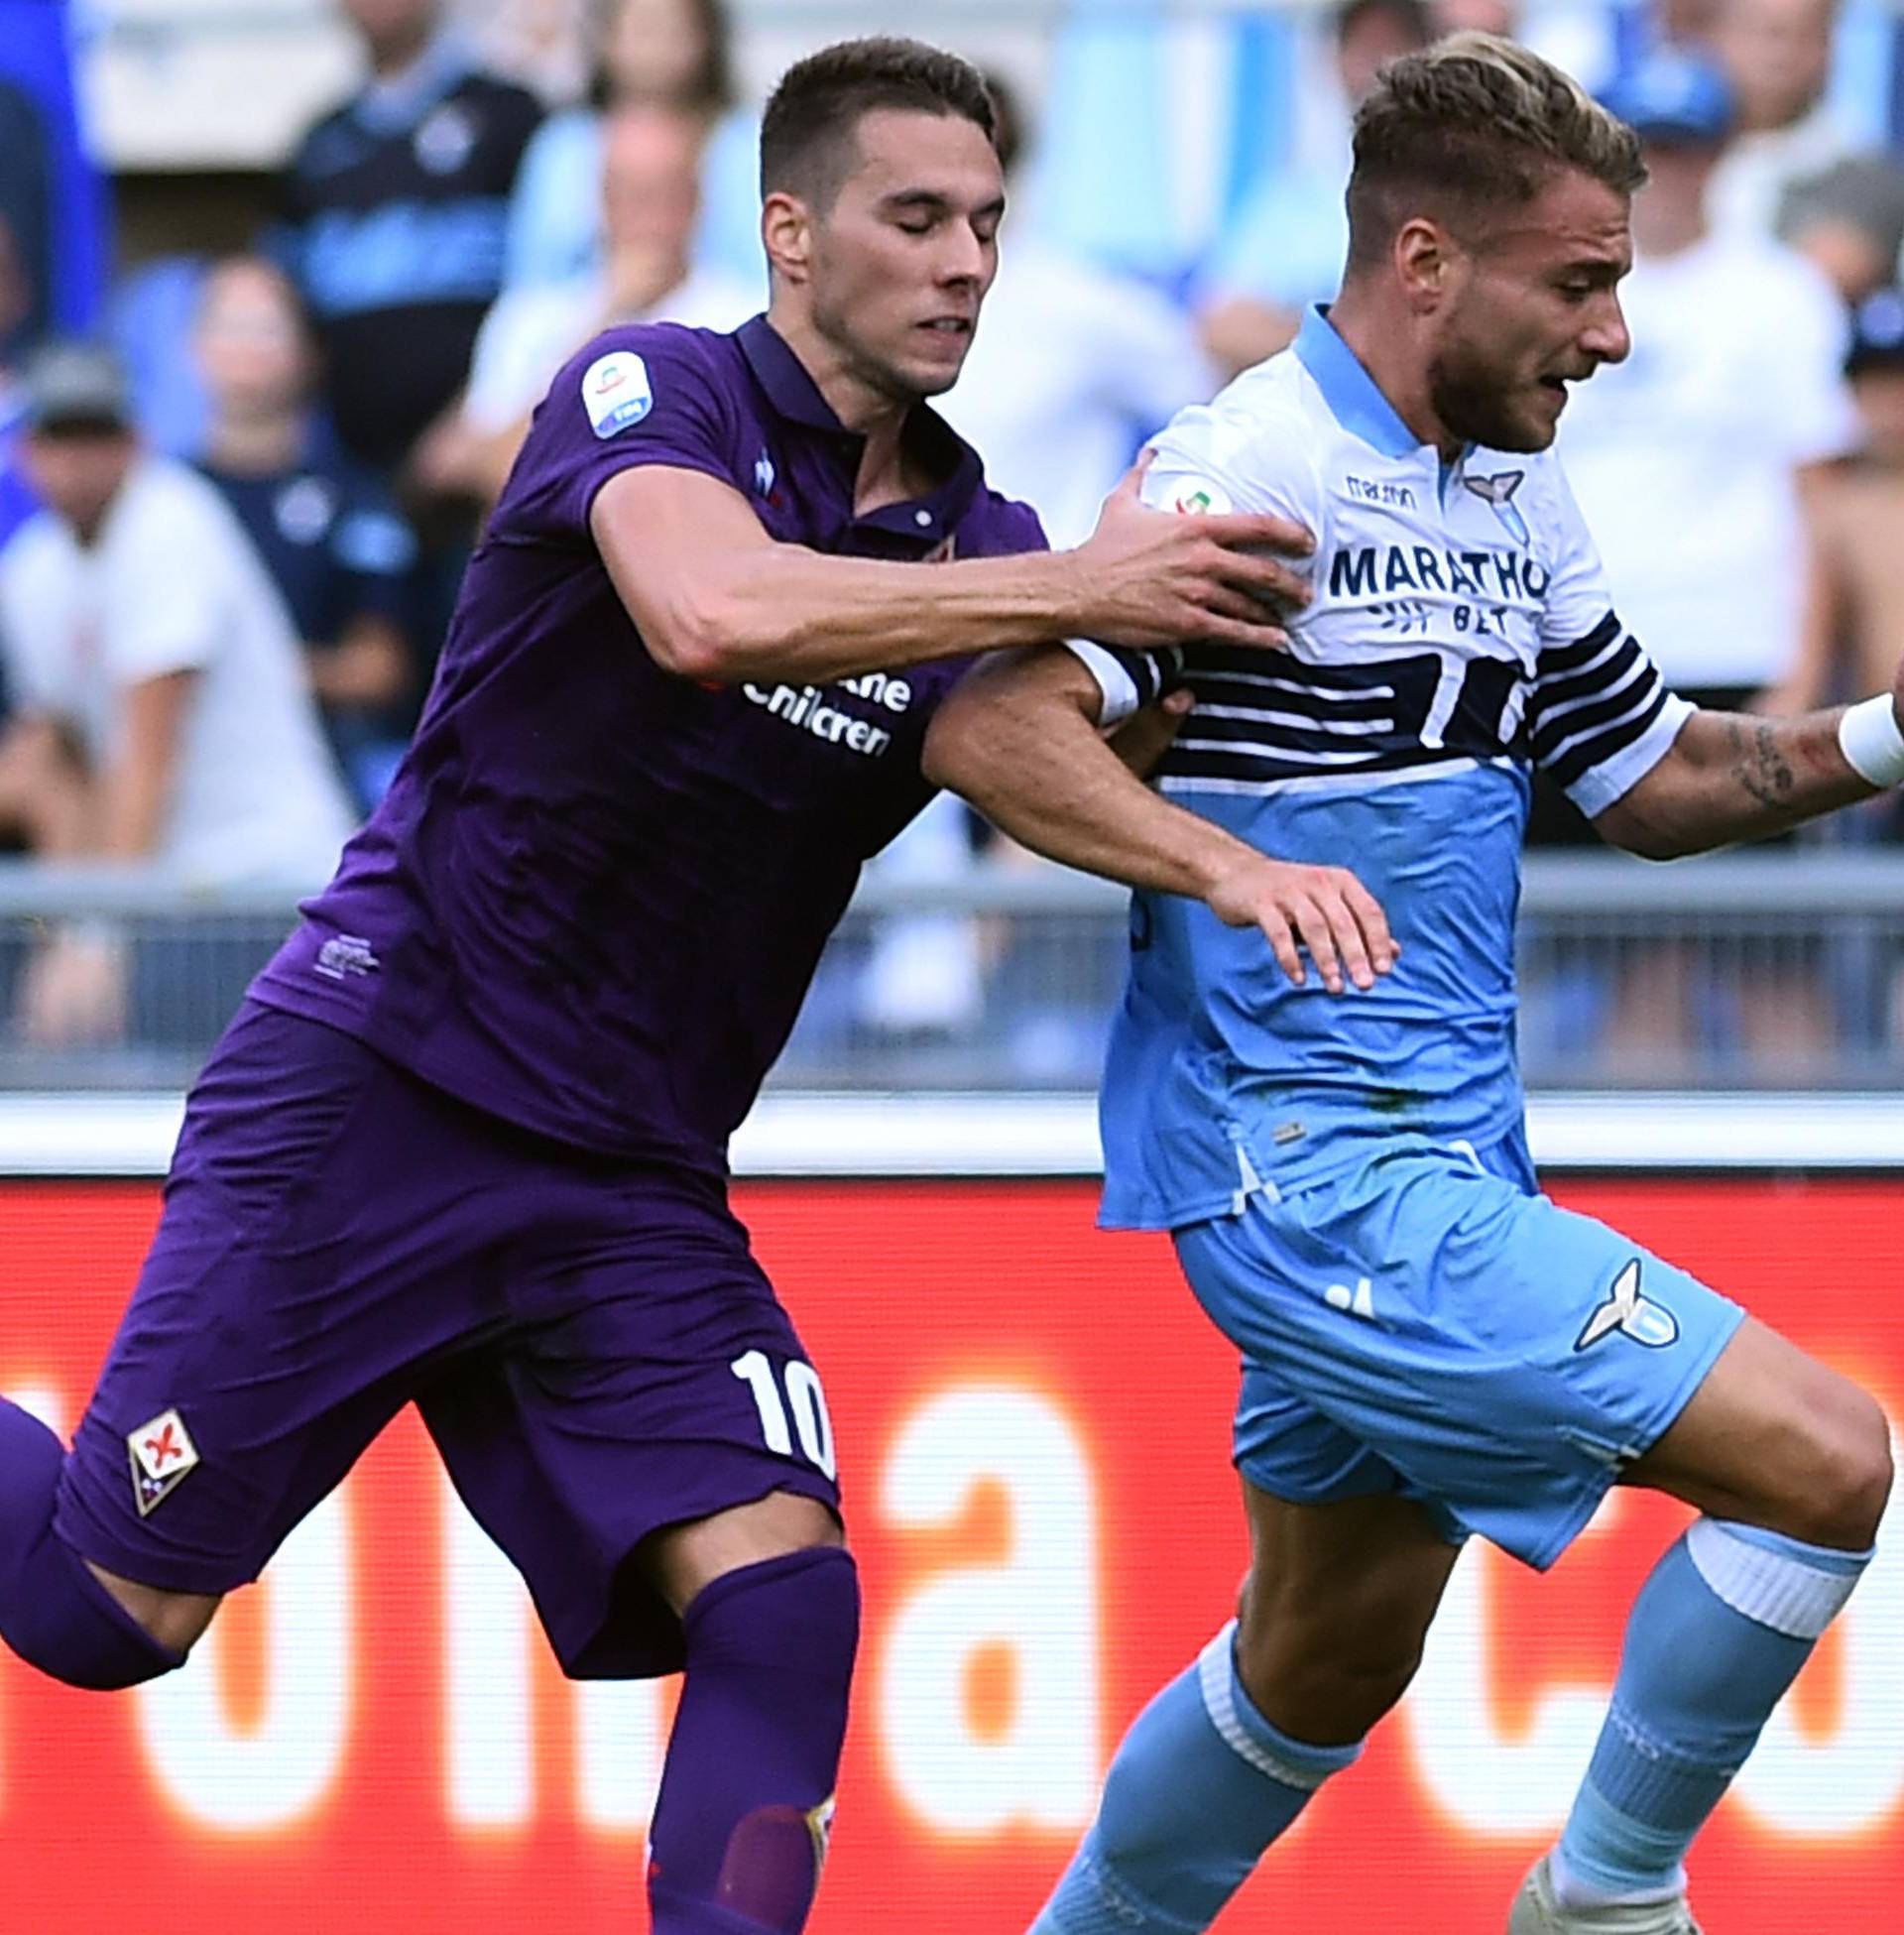 Football League Serie A-Lazio vs Fiorentina-Rome 07-10-2018